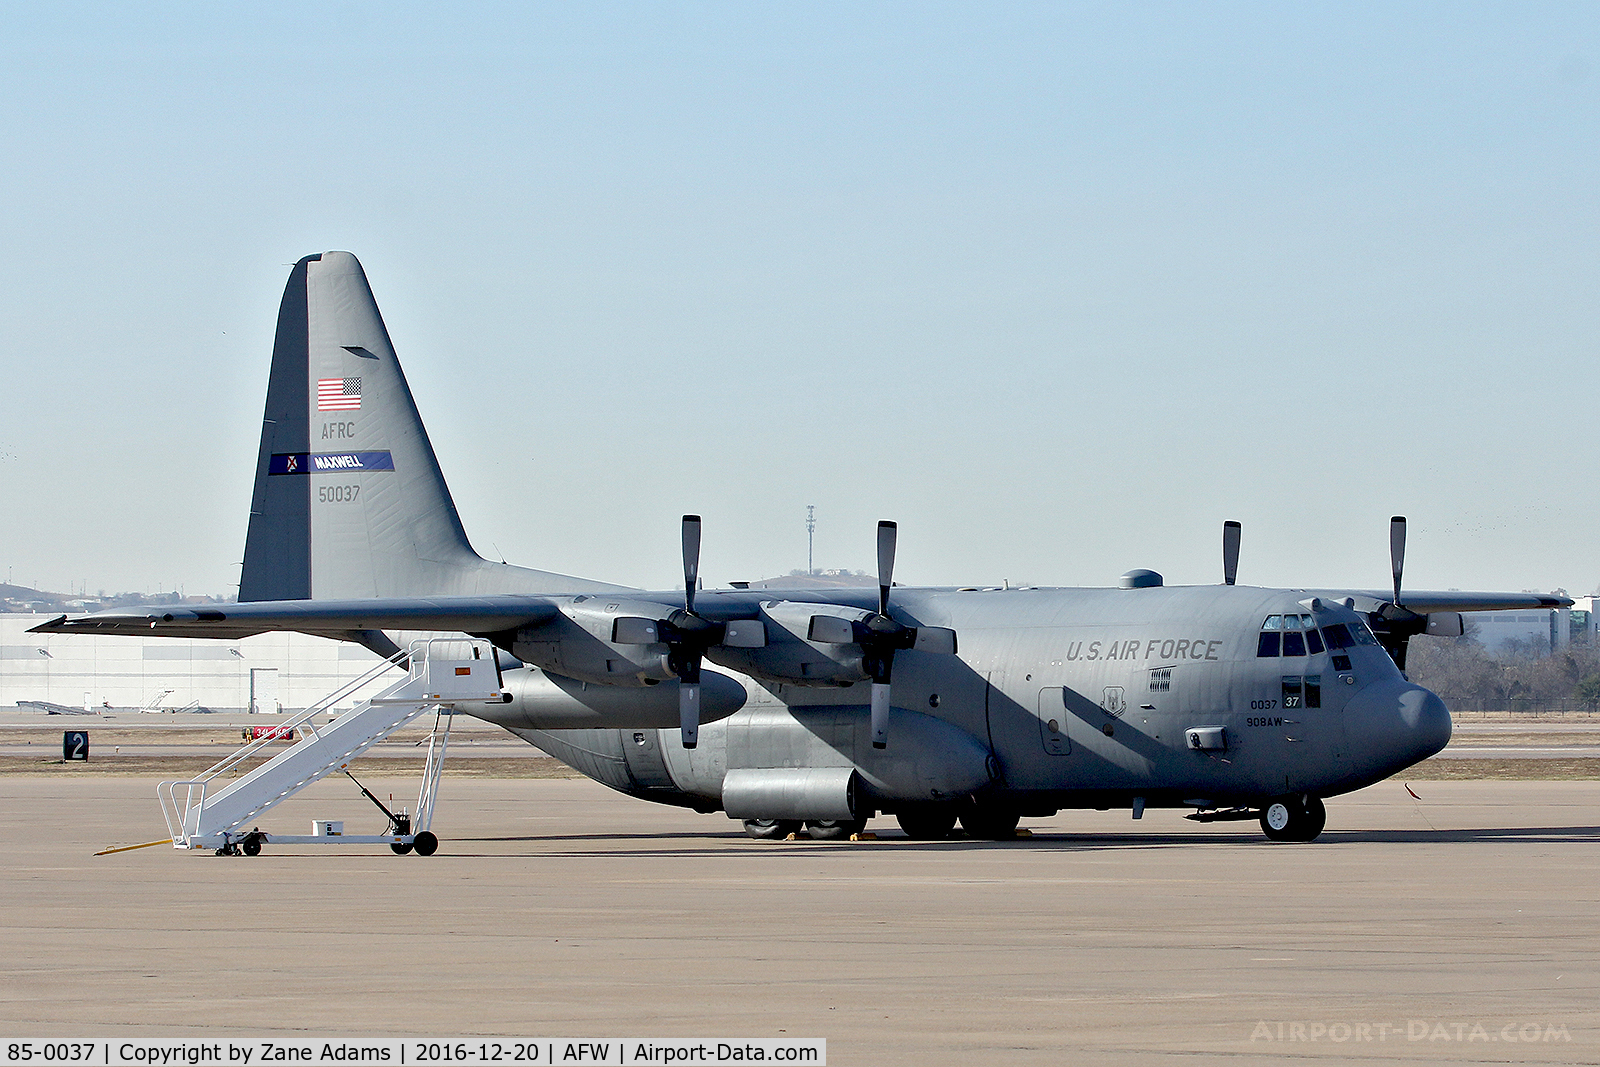 85-0037, 1985 Lockheed C-130H Hercules C/N 382-5077, At Alliance Airport - Fort Worth,TX